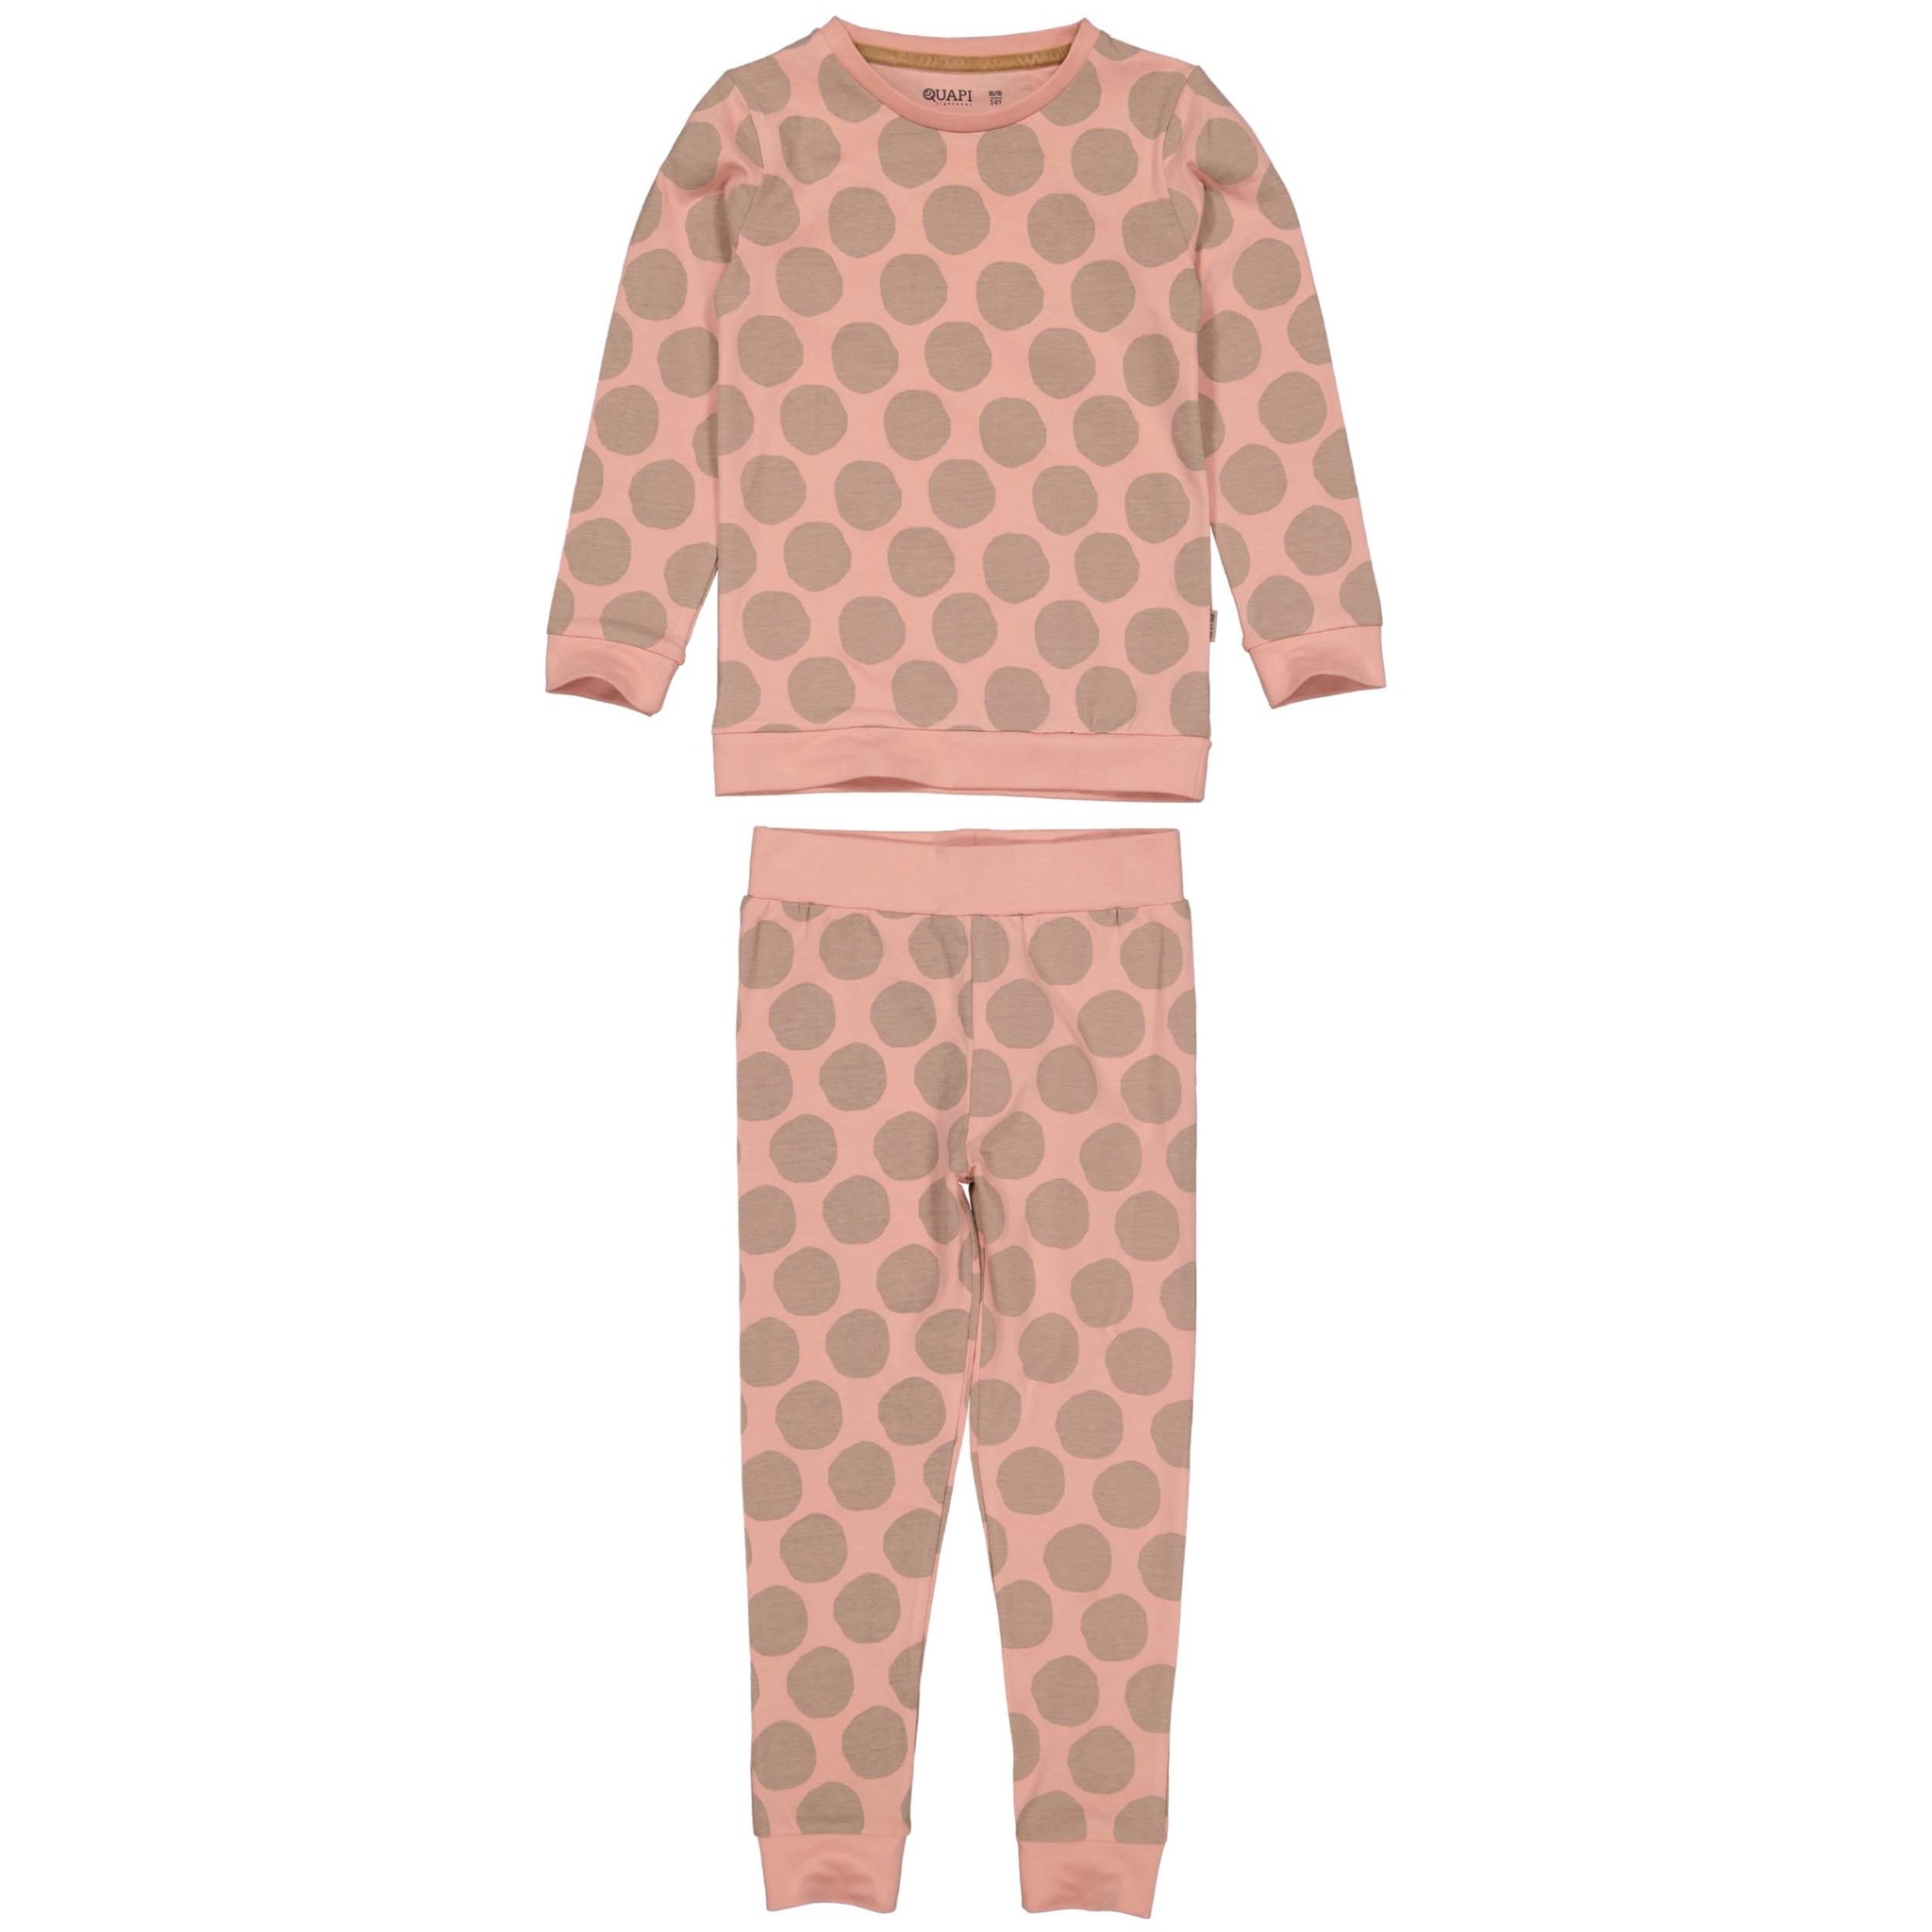 Quapi Meisjes pyjama - PuckkB - AOP Zacht roze stippen